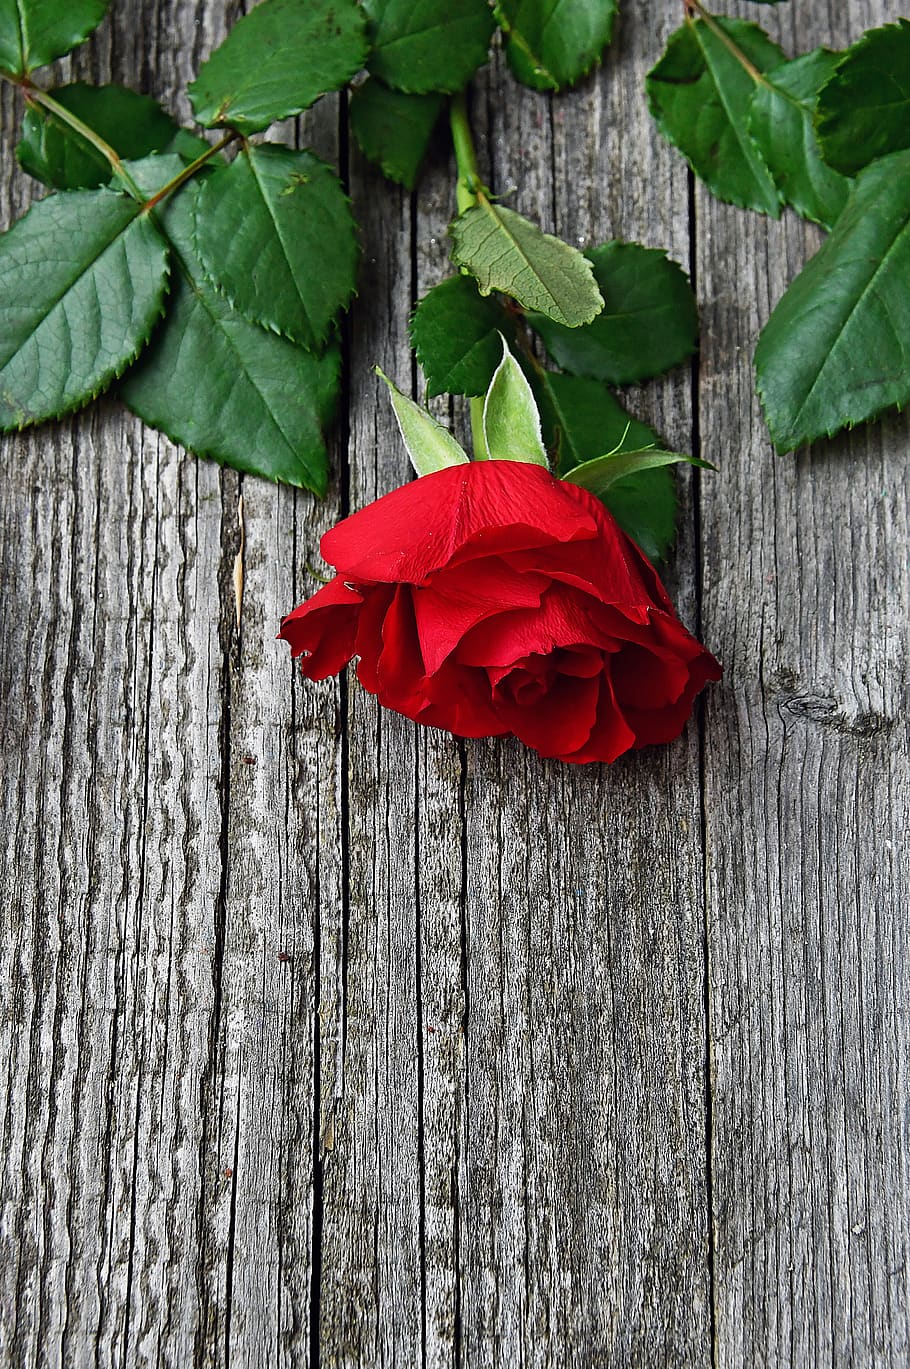 50,000+ Best Rose Images & Free Flower Photos - Pixabay